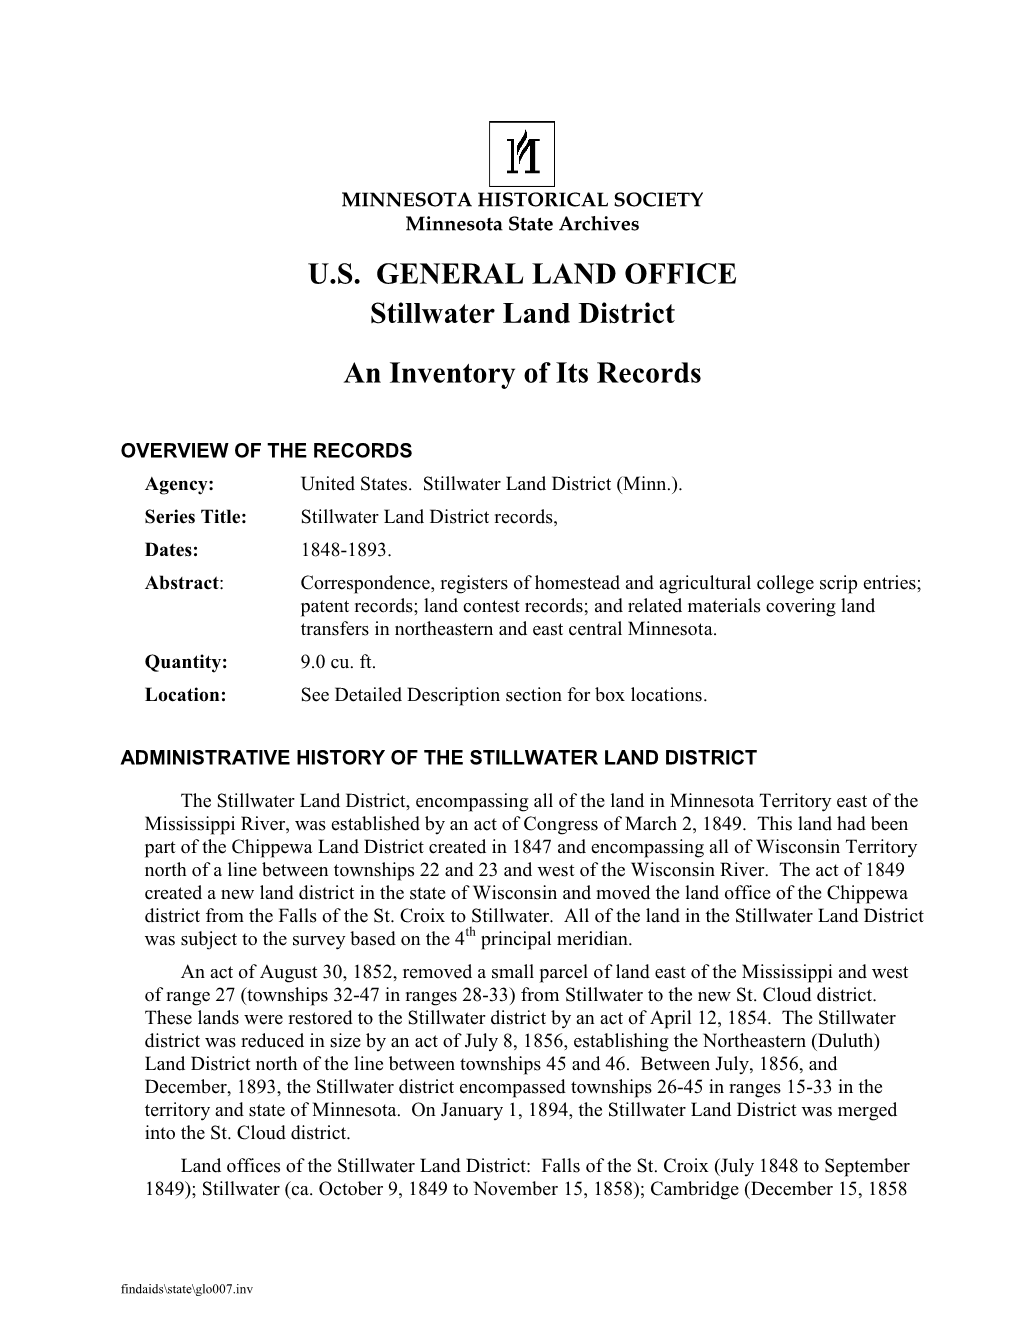 U.S. GENERAL LAND OFFICE: Stillwater Land District: an Inventory